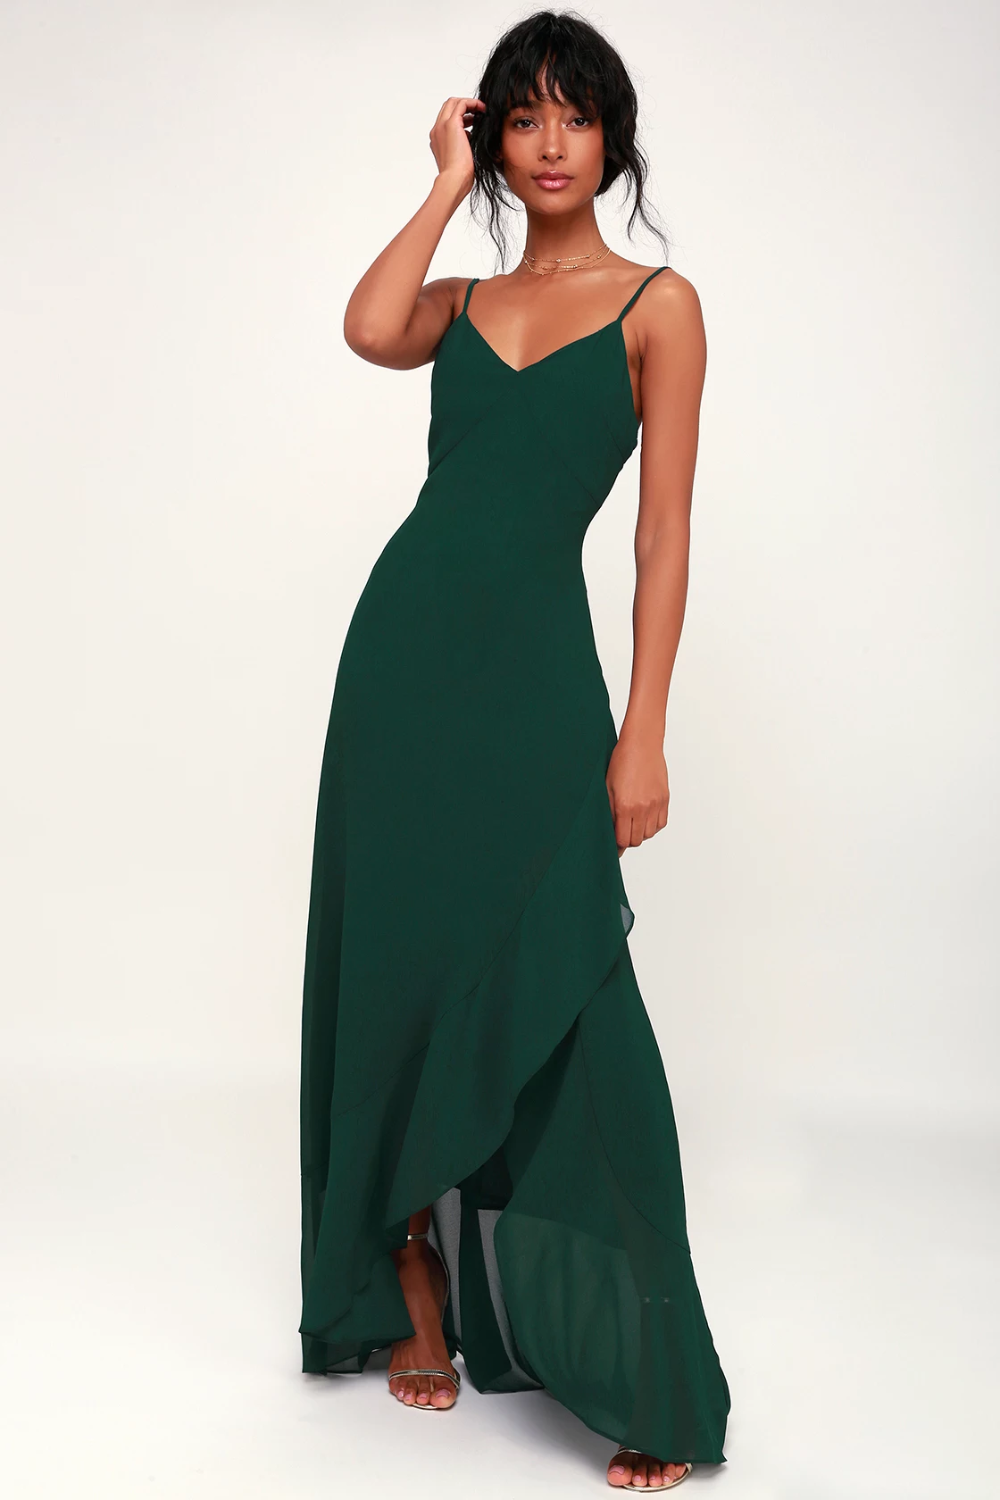 dark green dress 60+ Most Fashionable Semi Formal Wedding Dresses for Female Guests - 12